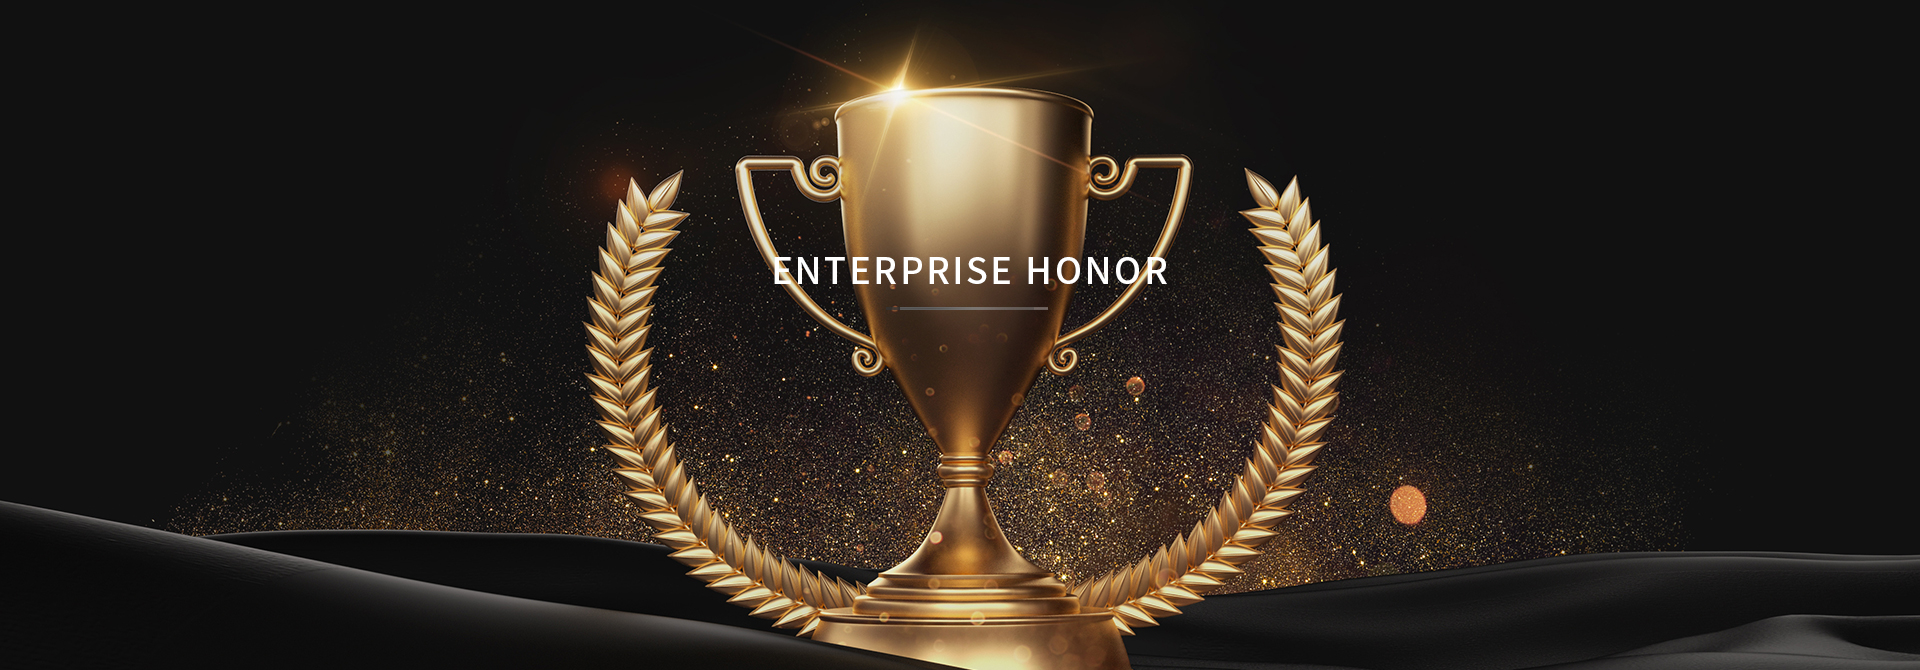 Enterprise honor